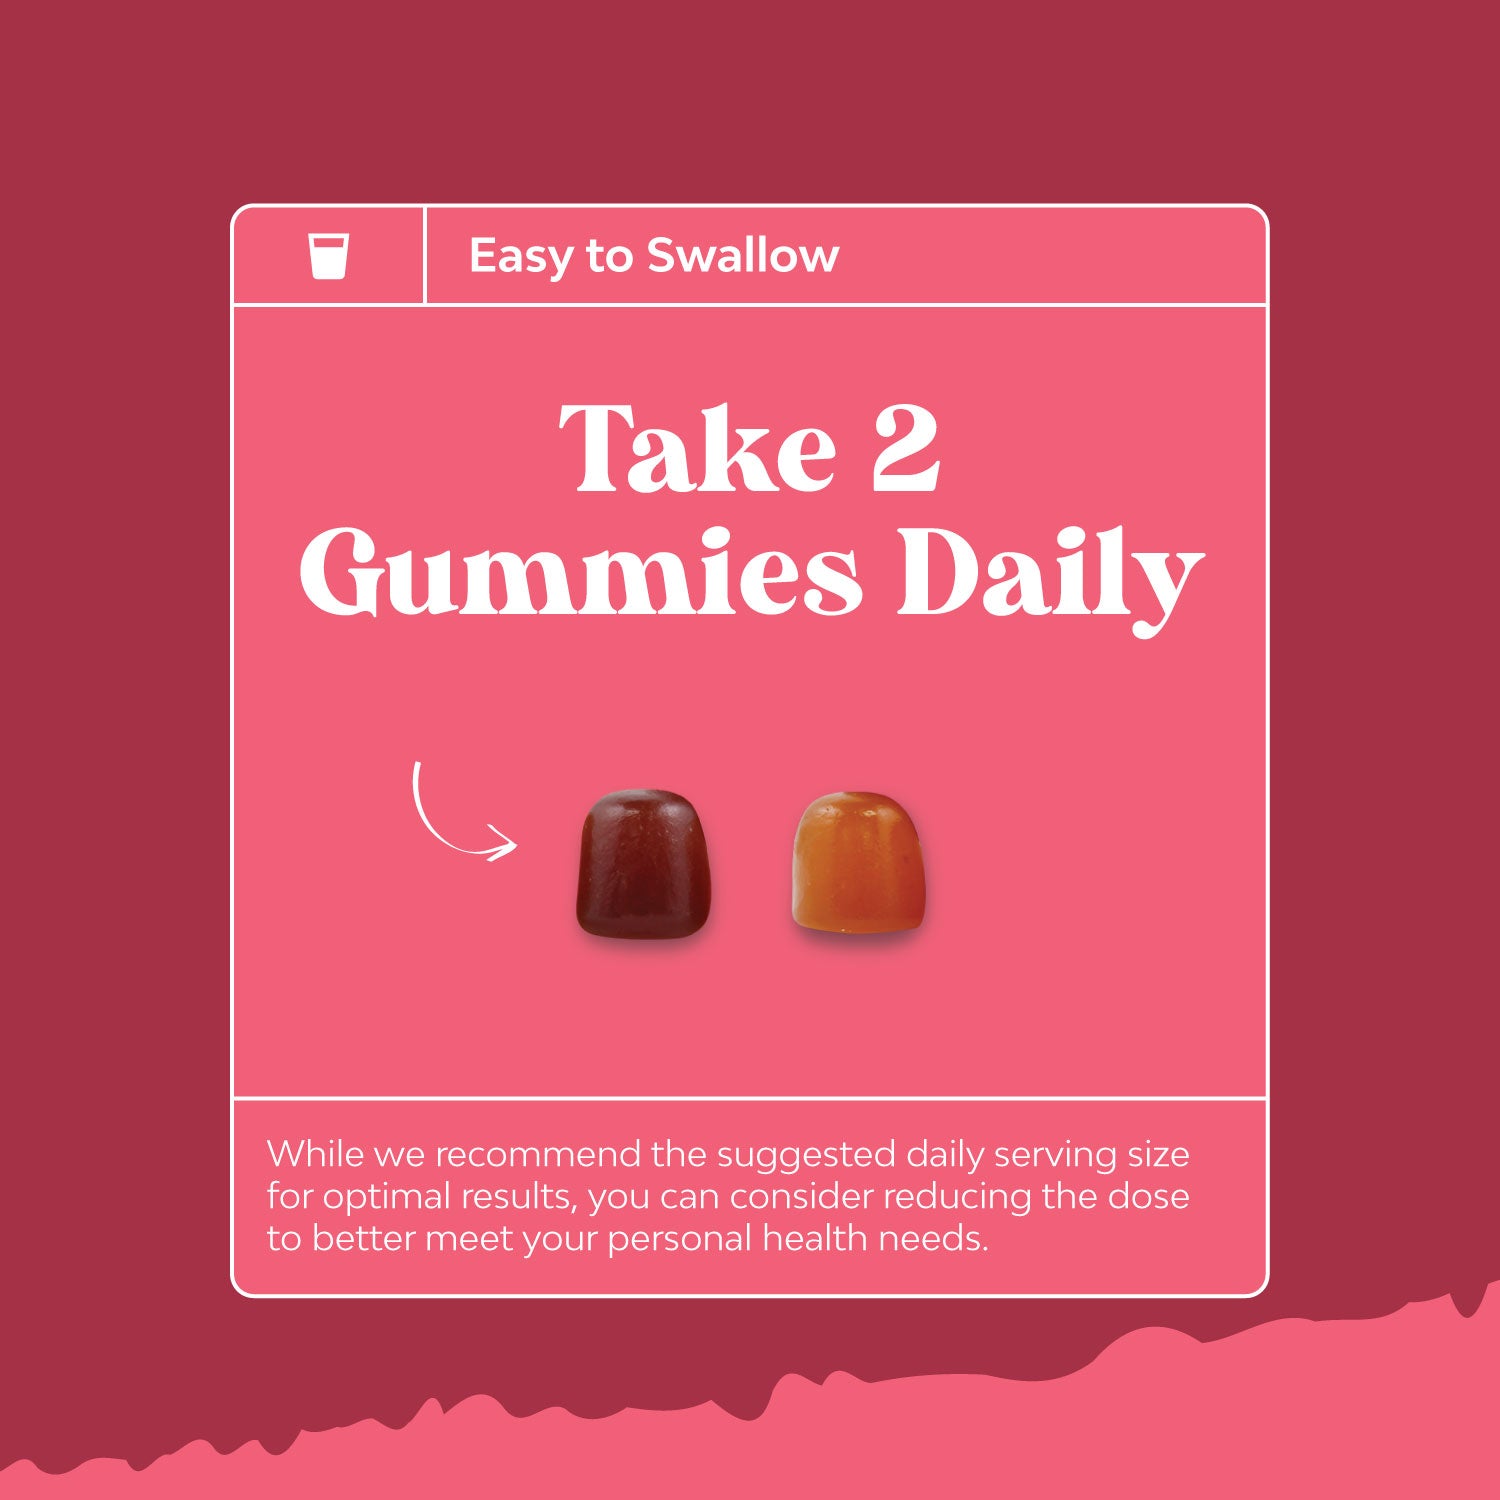 Delicious Natural Multivitamin for Women Gummies - 90ct